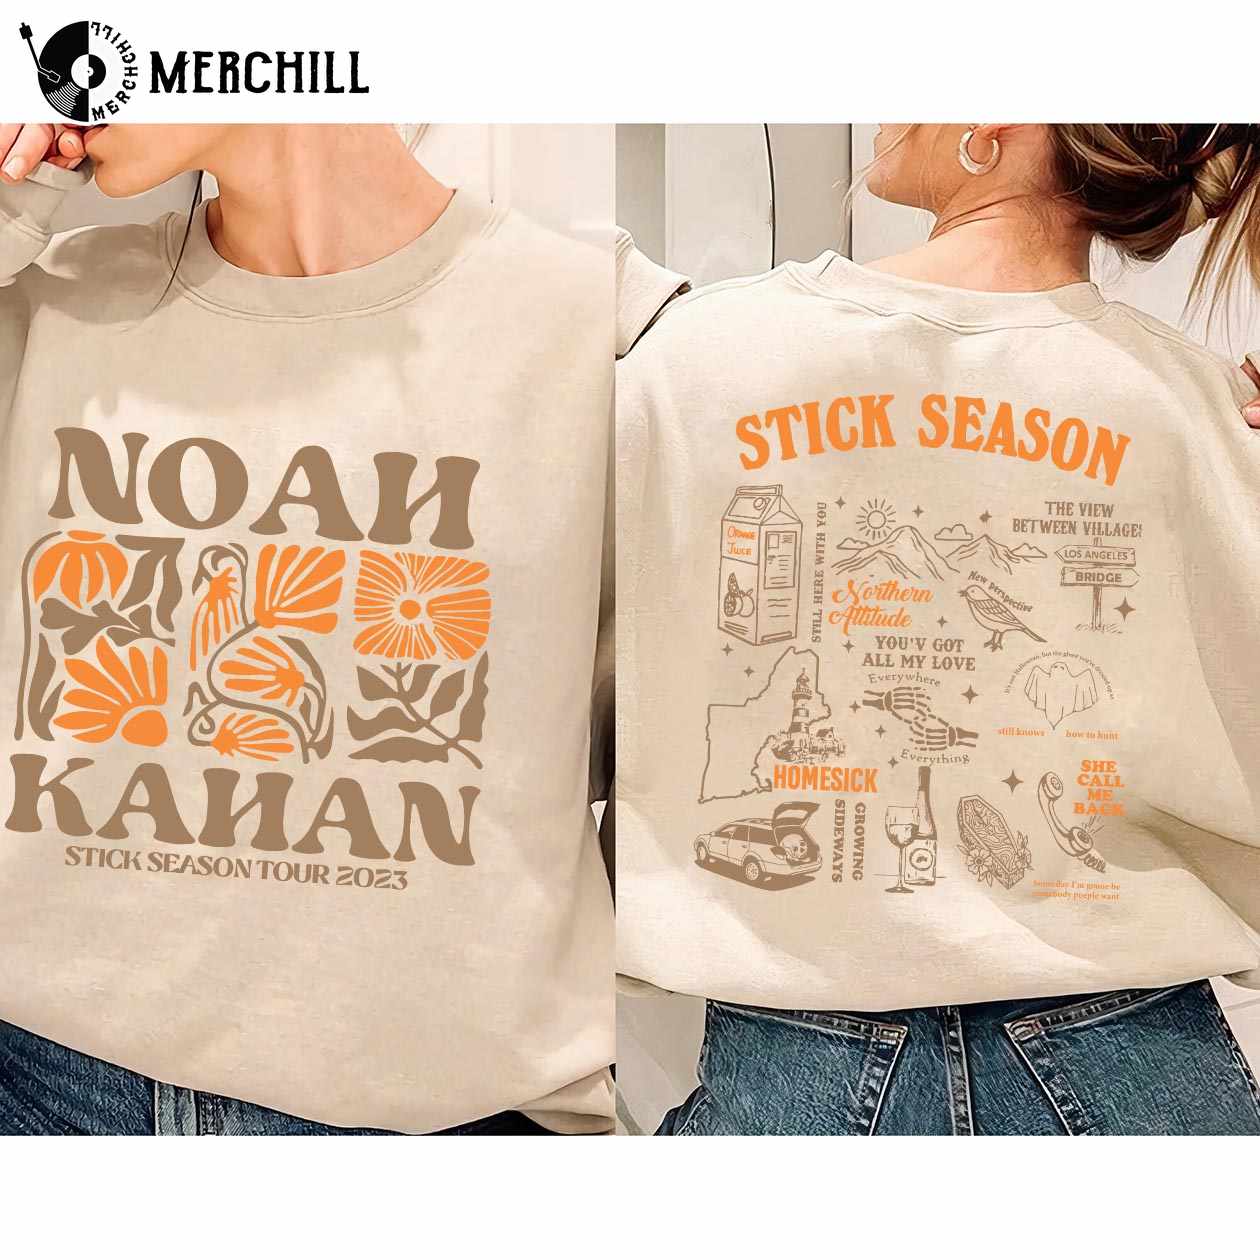 Noah Kahan - Stick Season